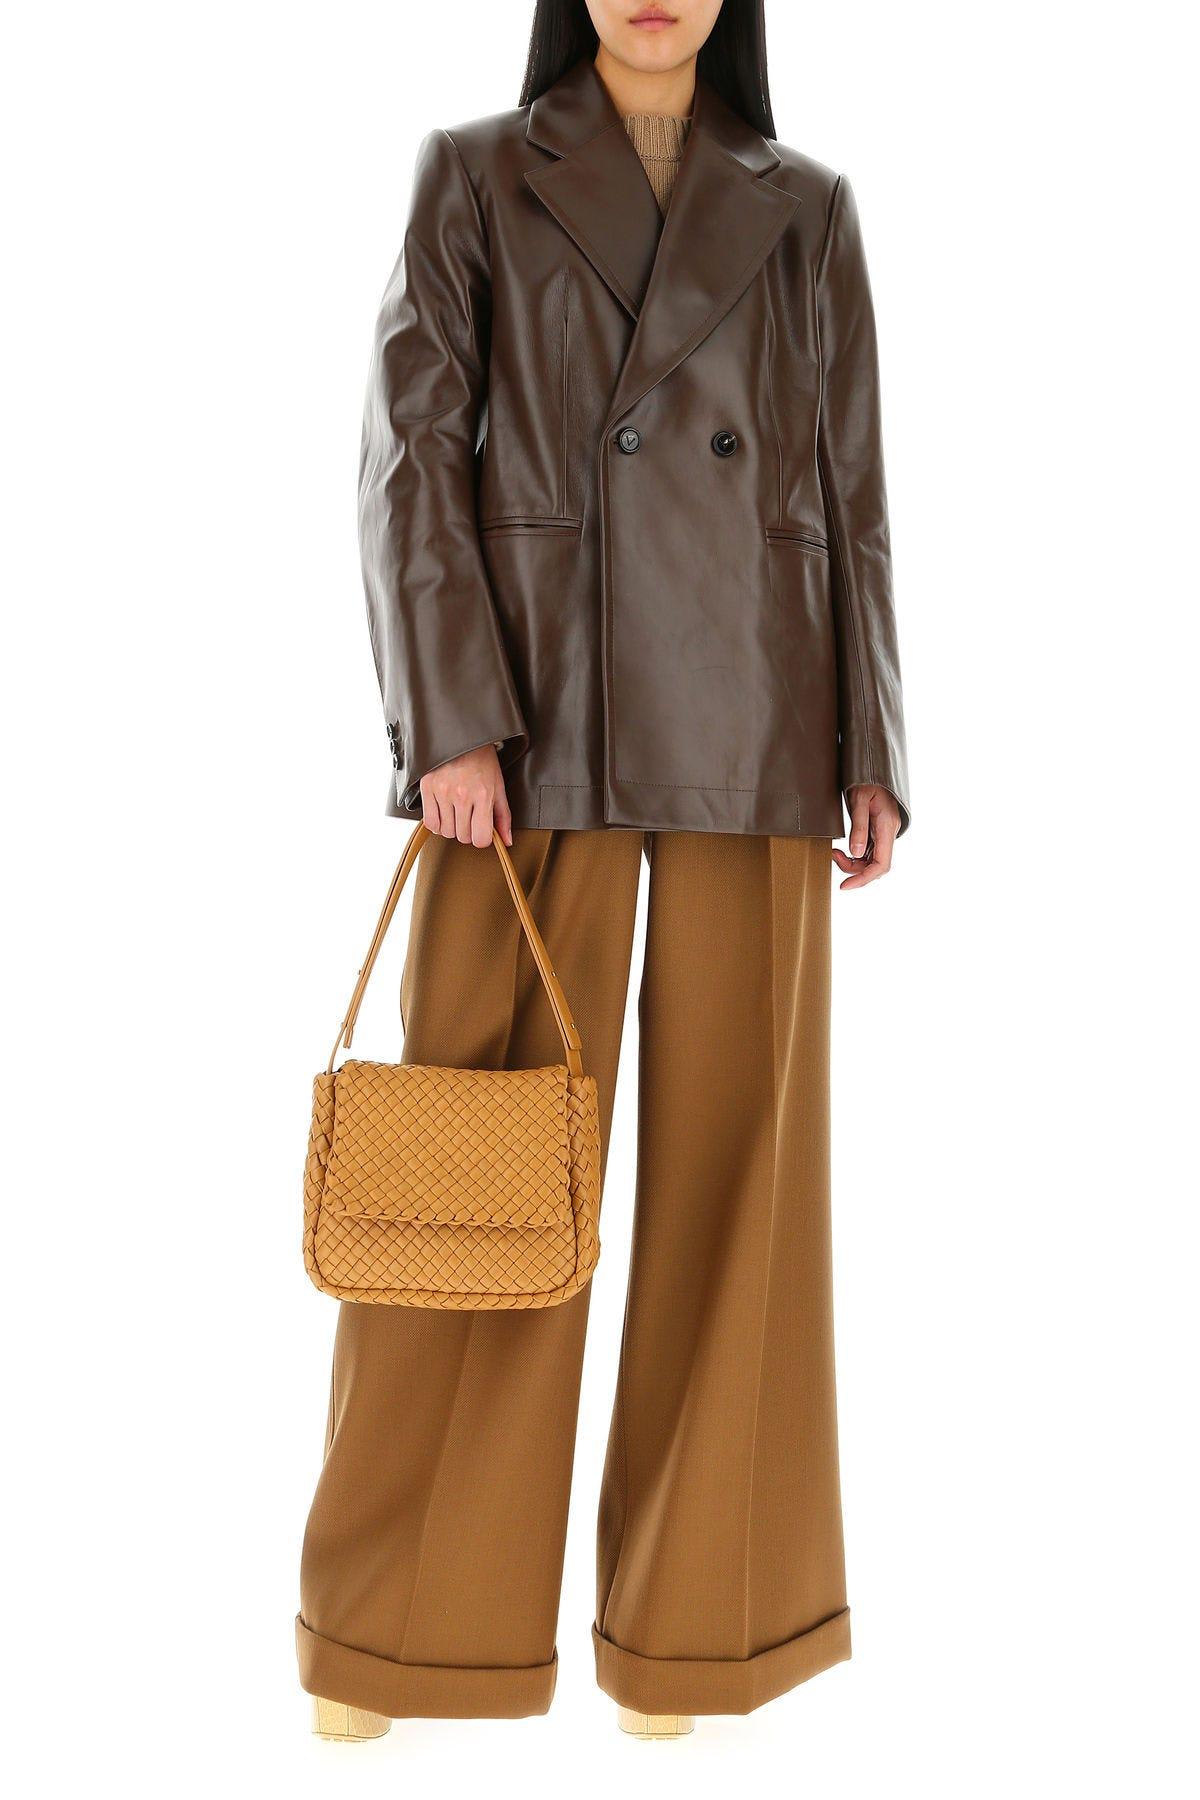 Bottega Veneta Womens Caramel Cobble Intrecciato Leather Shoulder Bag